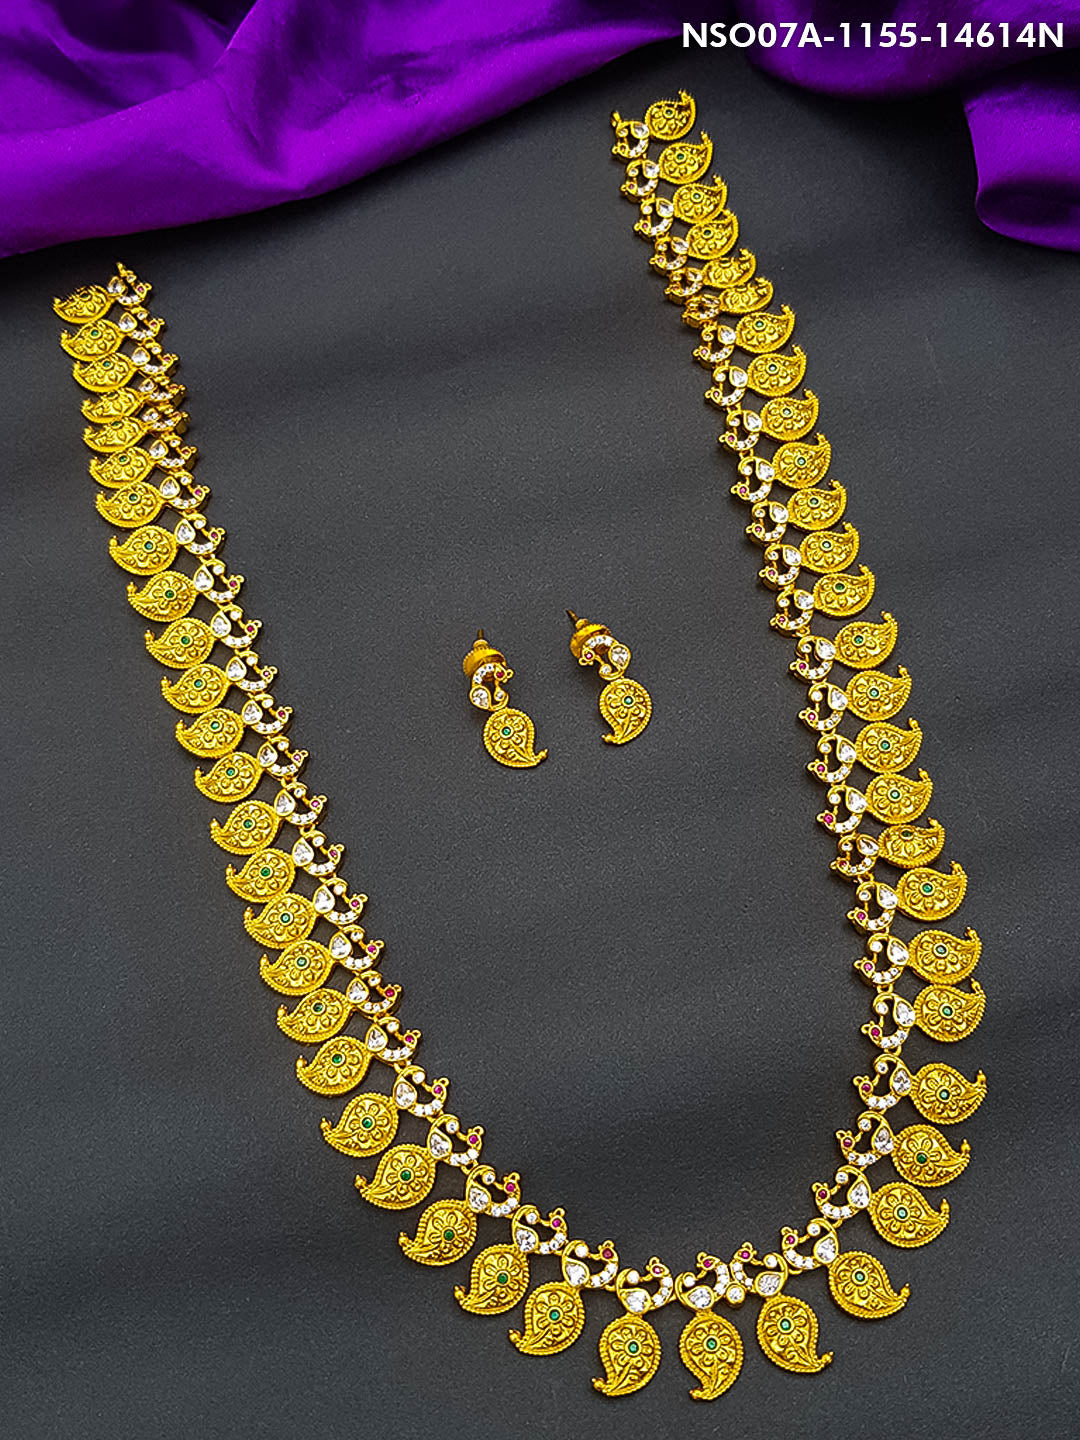 Antique Mango motif Gold Plated Long Necklace Set 14614N